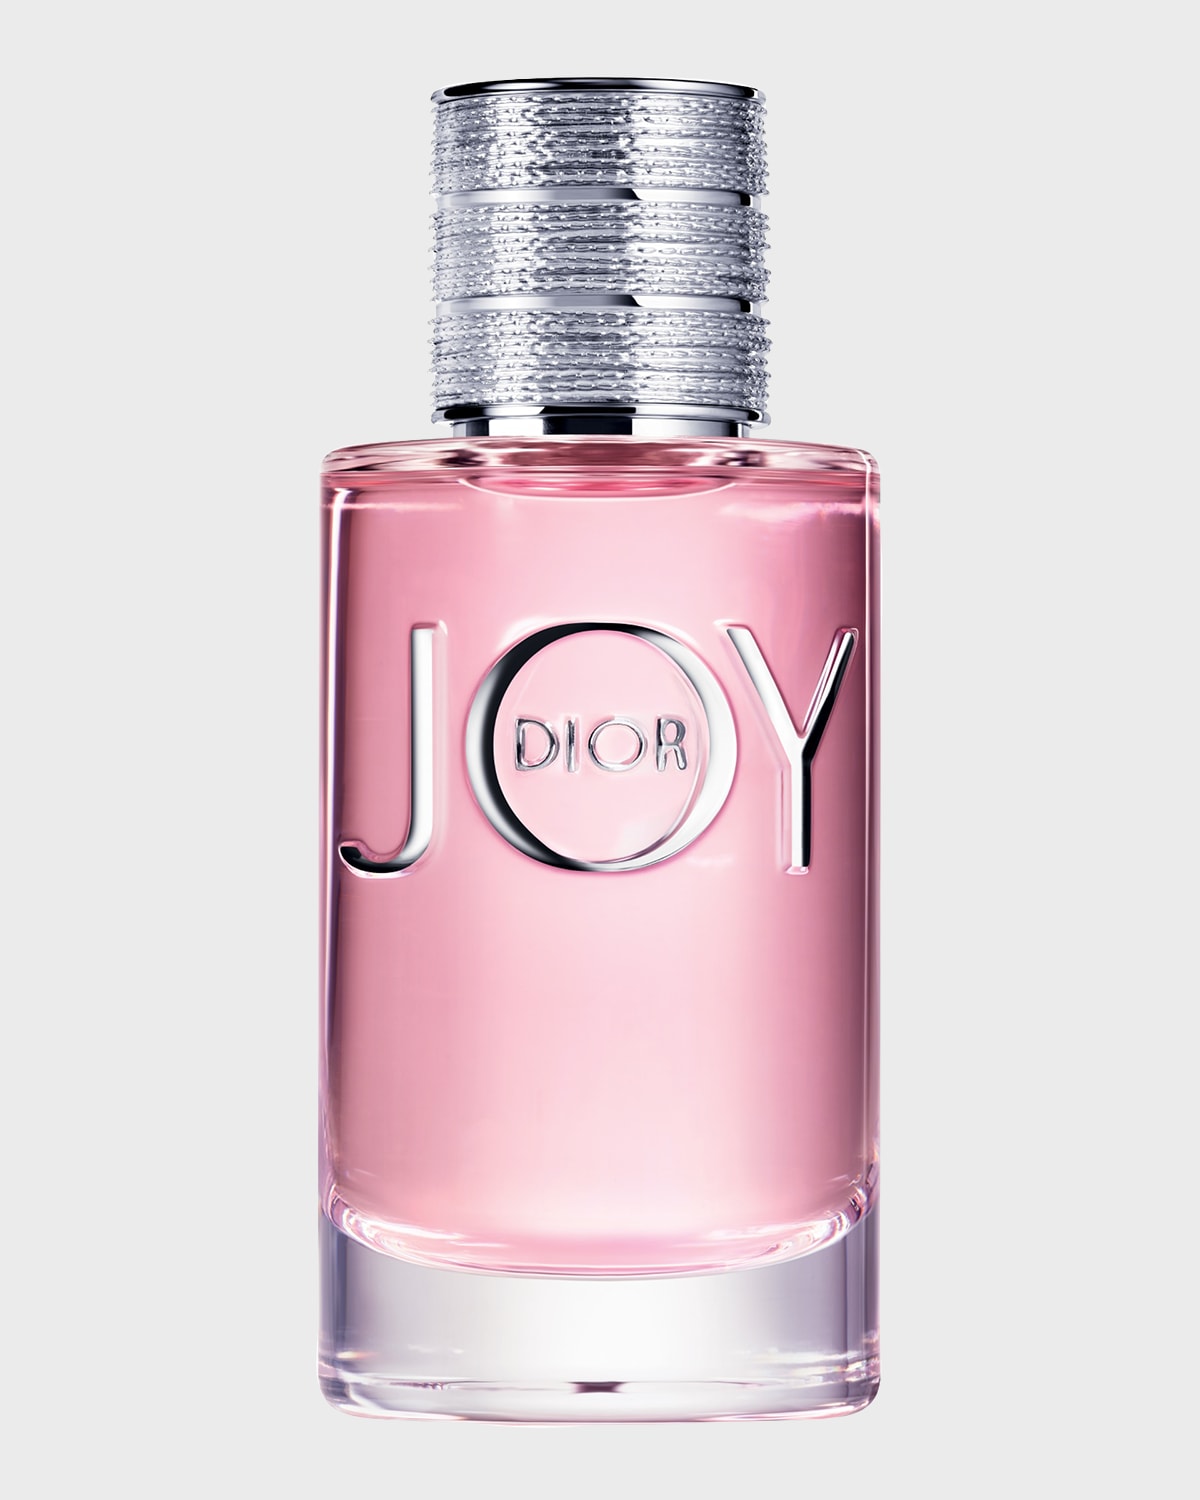 Dior JOY by Dior Eau de Parfum Intense, 3 oz. Neiman Marcus